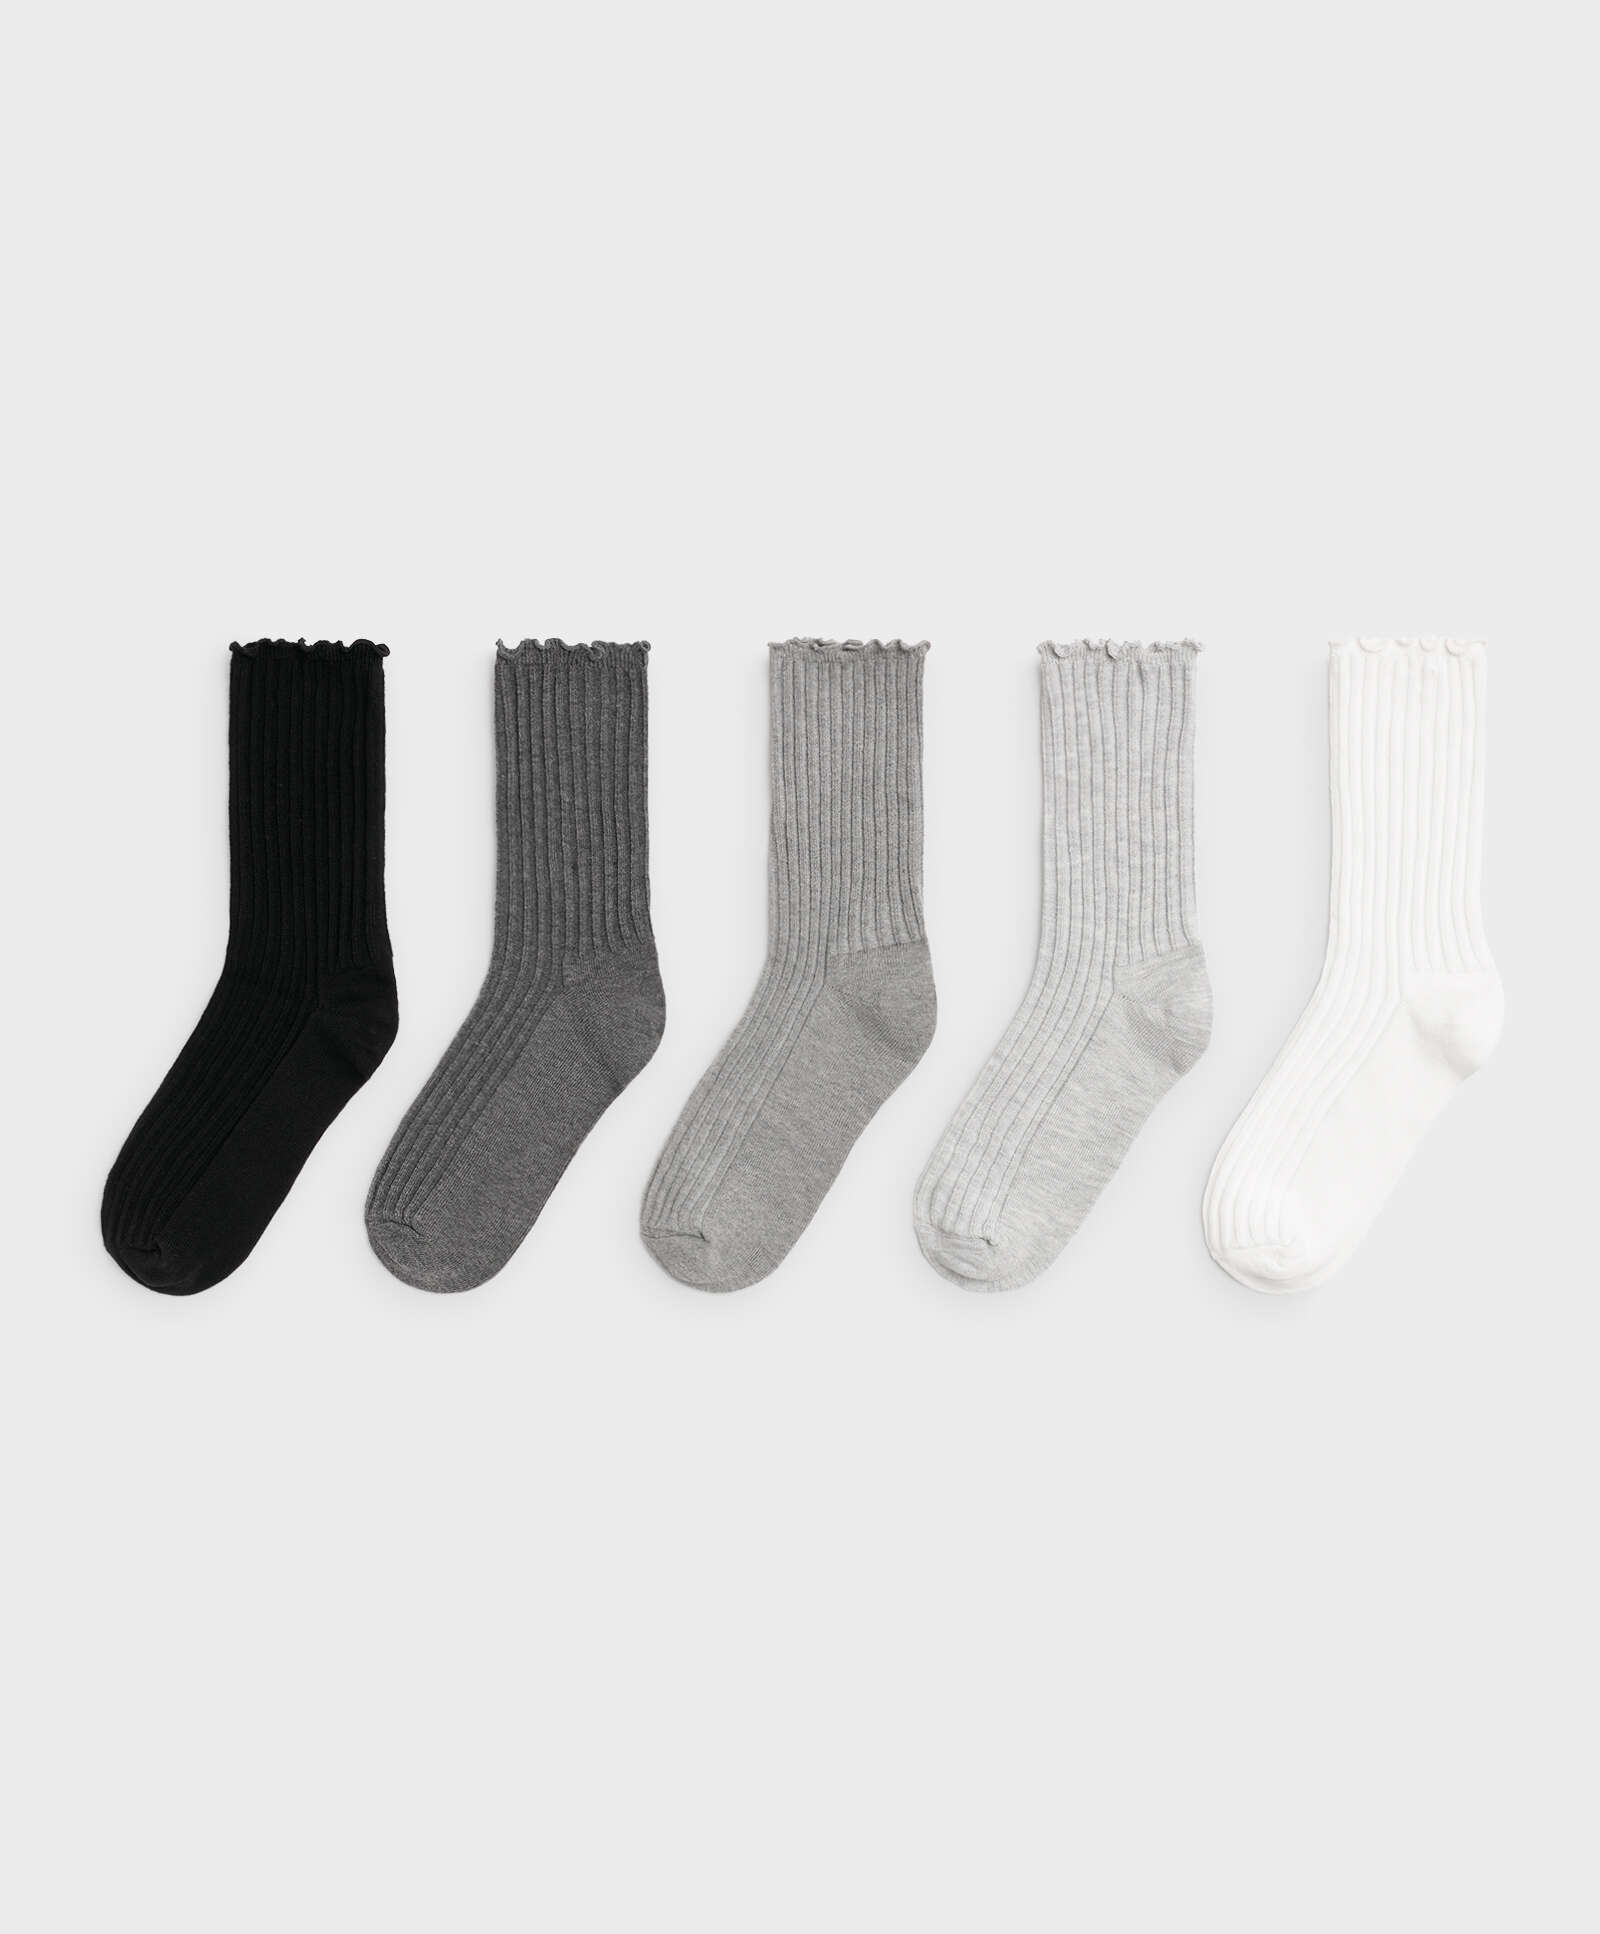 5 pairs of medium cotton socks with curled edge